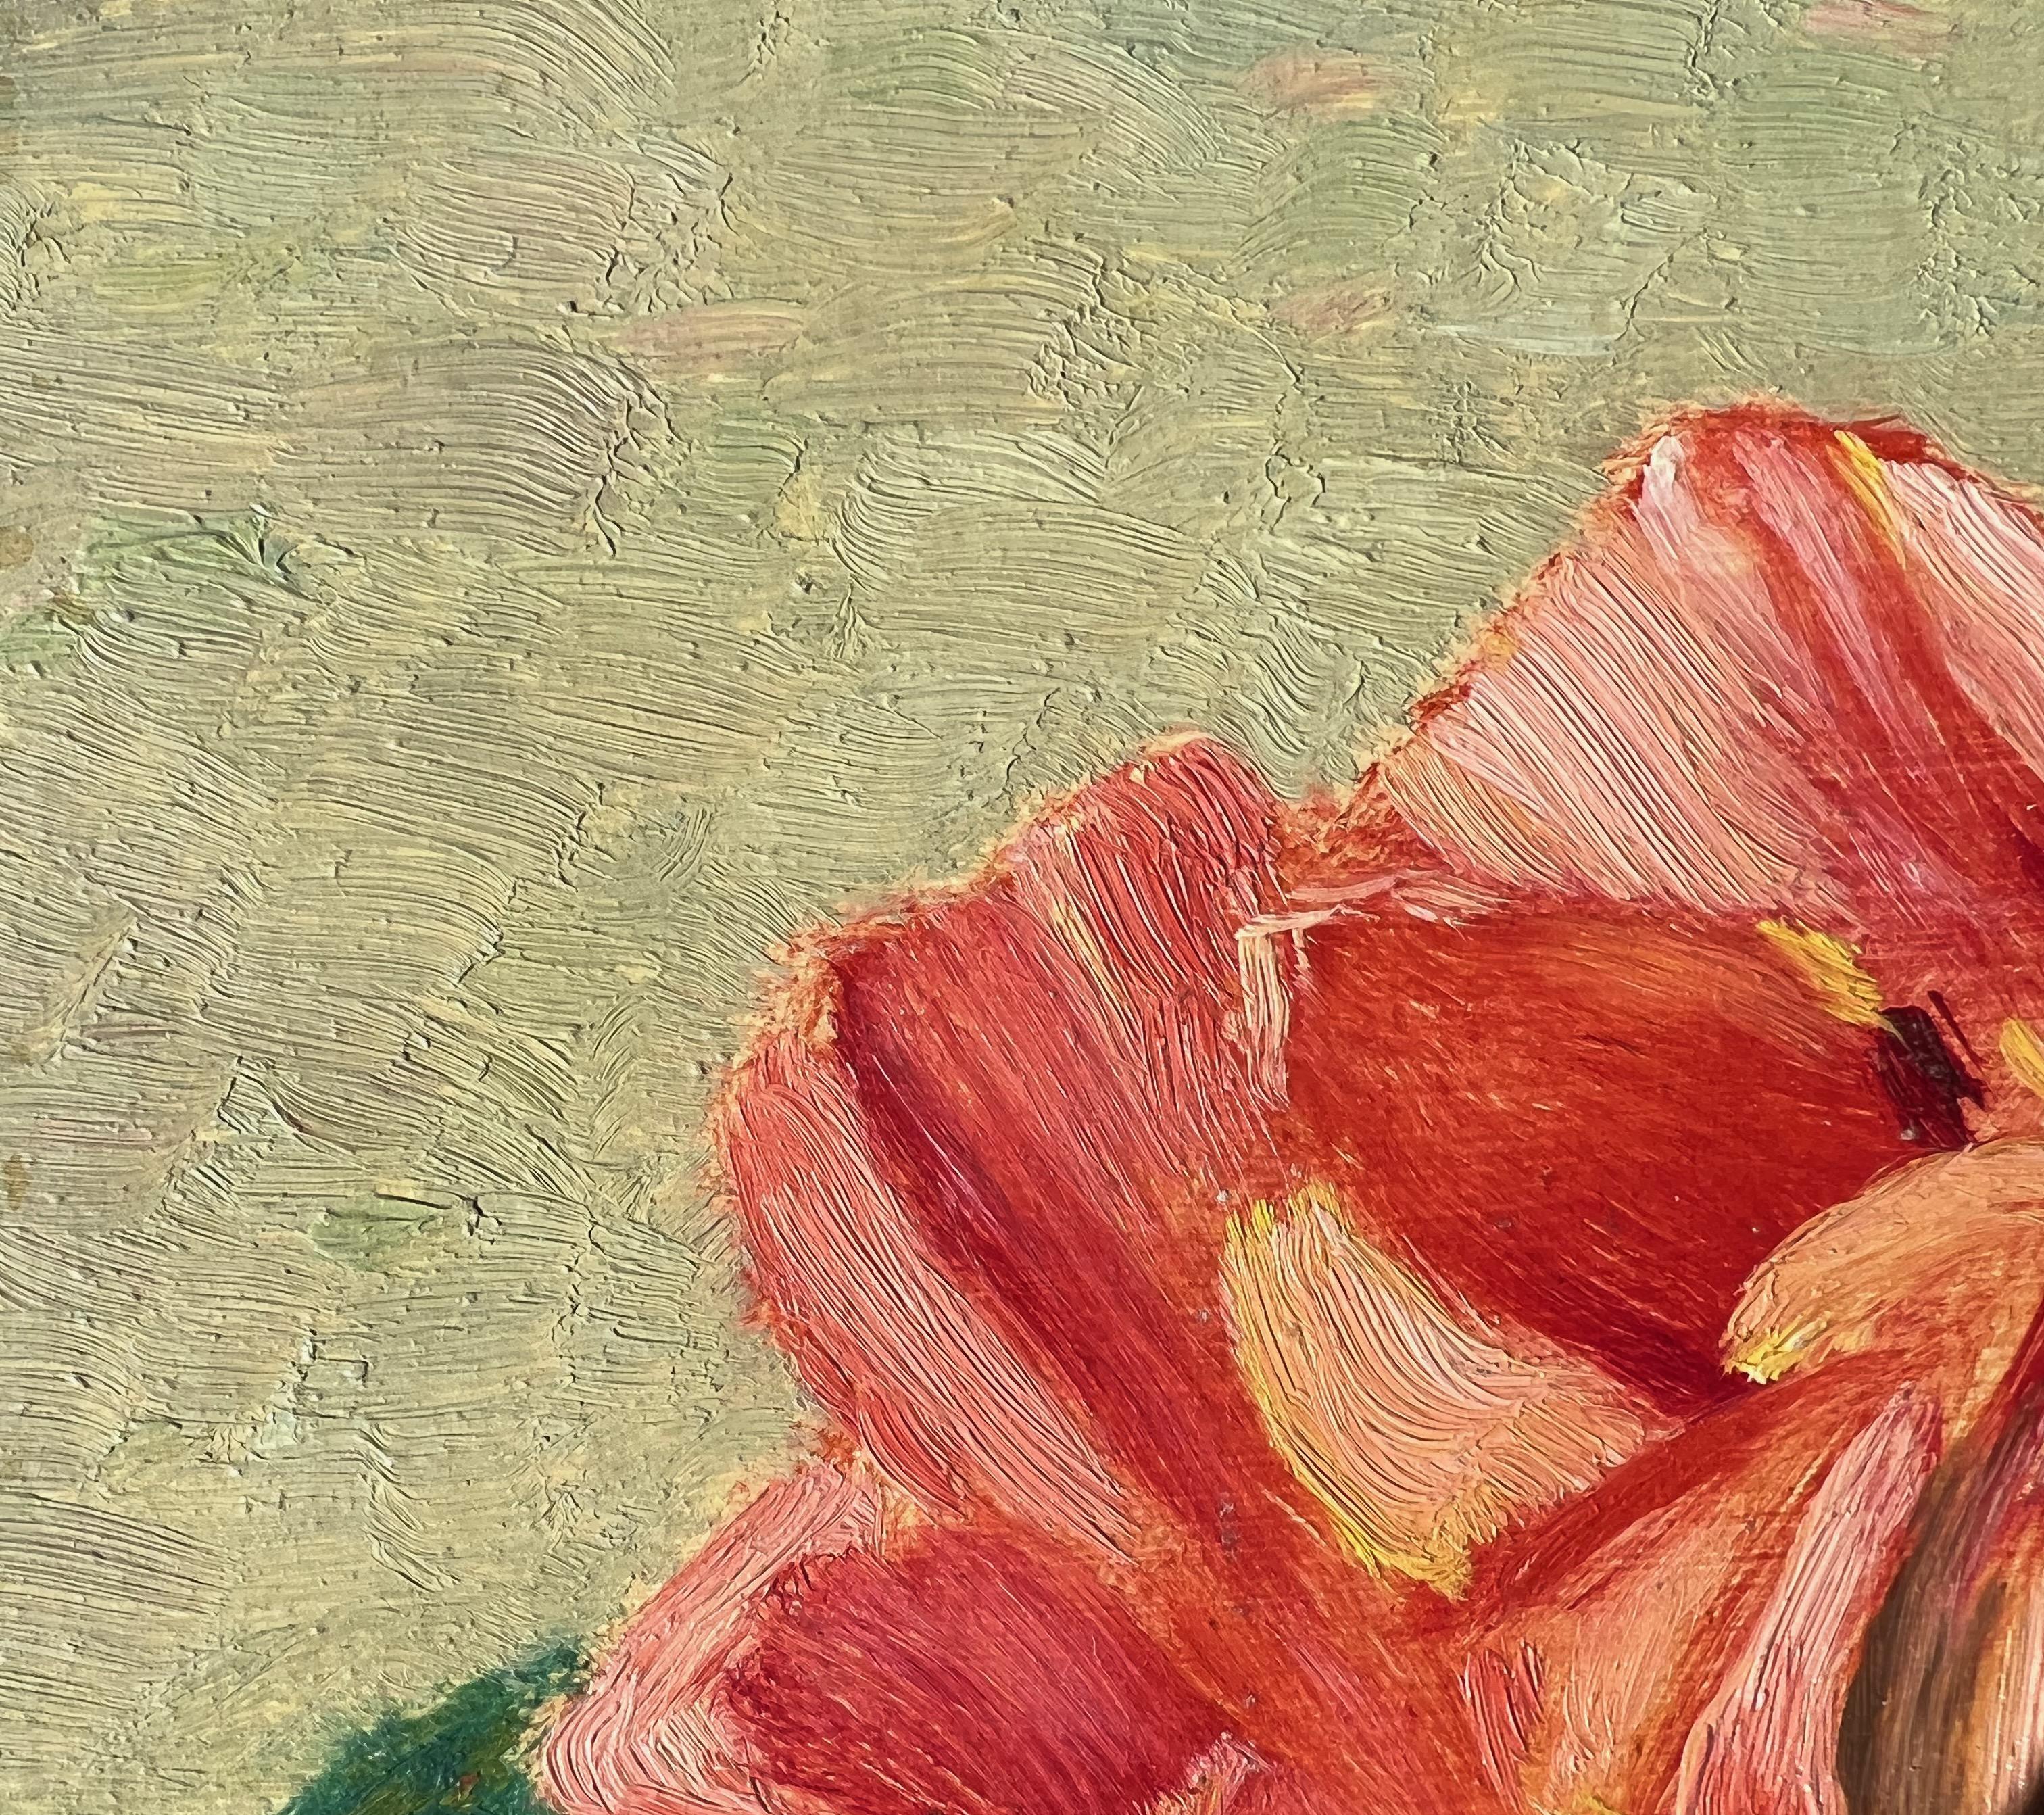 Rose in Flower Vase oil ptg Red, Pink & Yellow - Santa Barbara, California 0-202 - American Impressionist Painting by Francis Draper Jr.